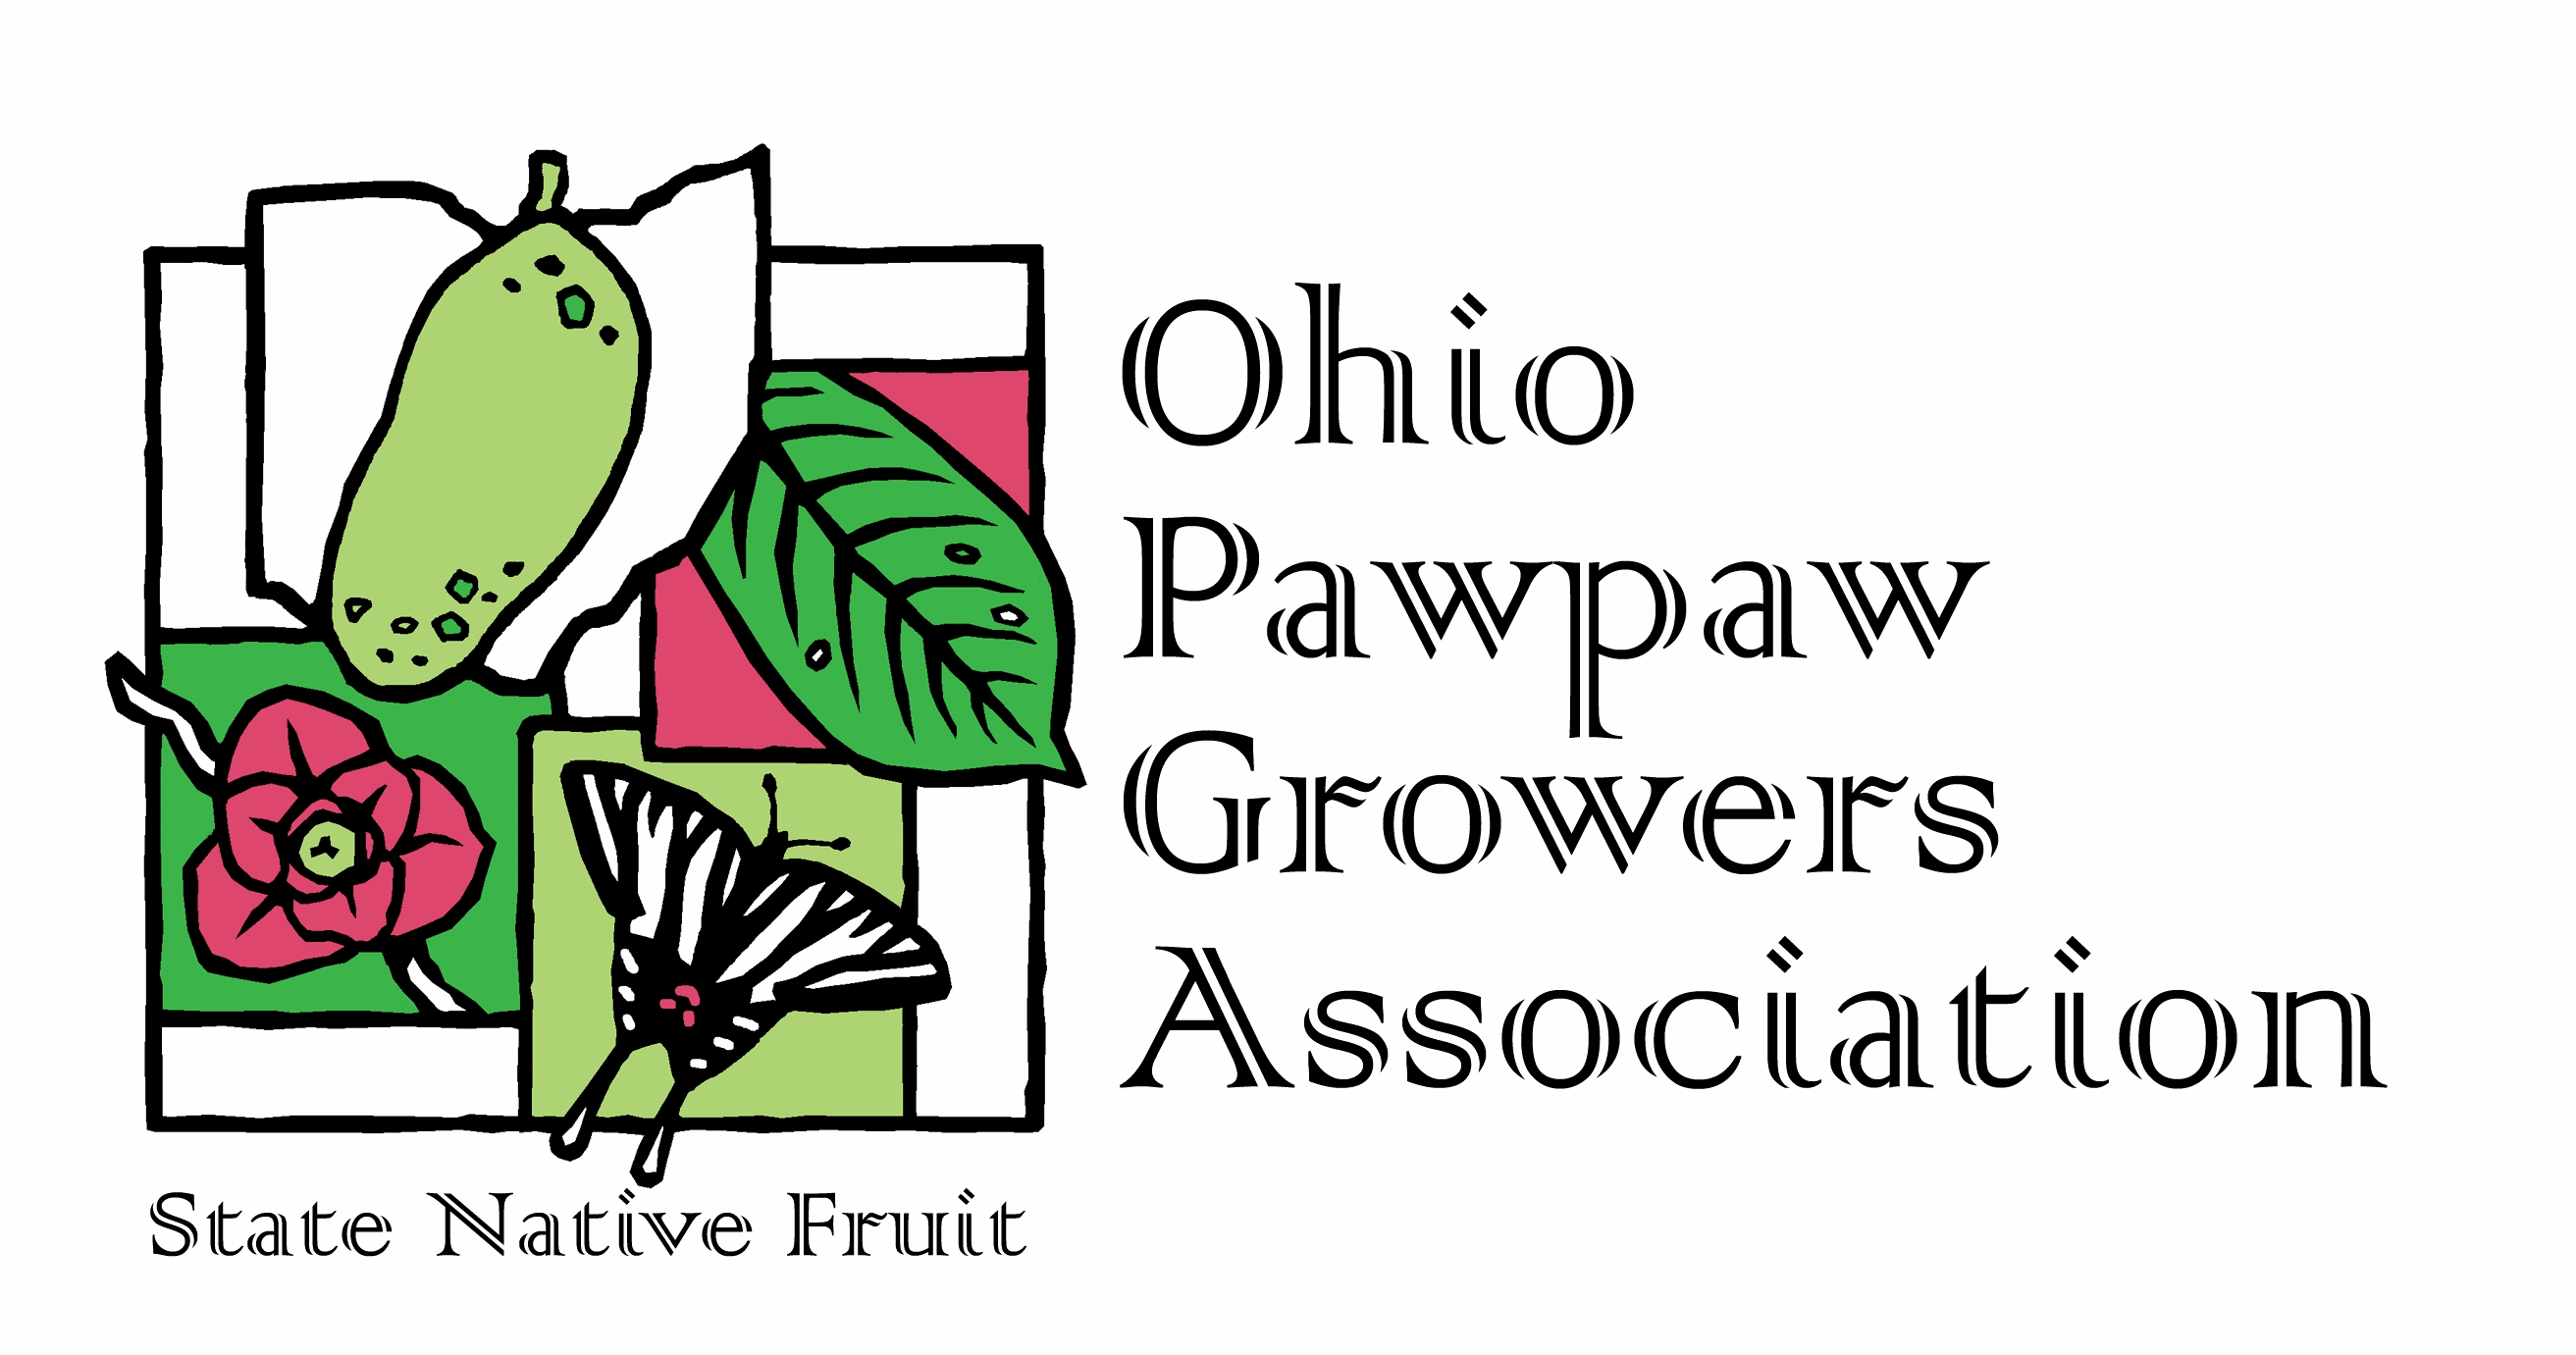 Ohio Pawpaw Grower's Association